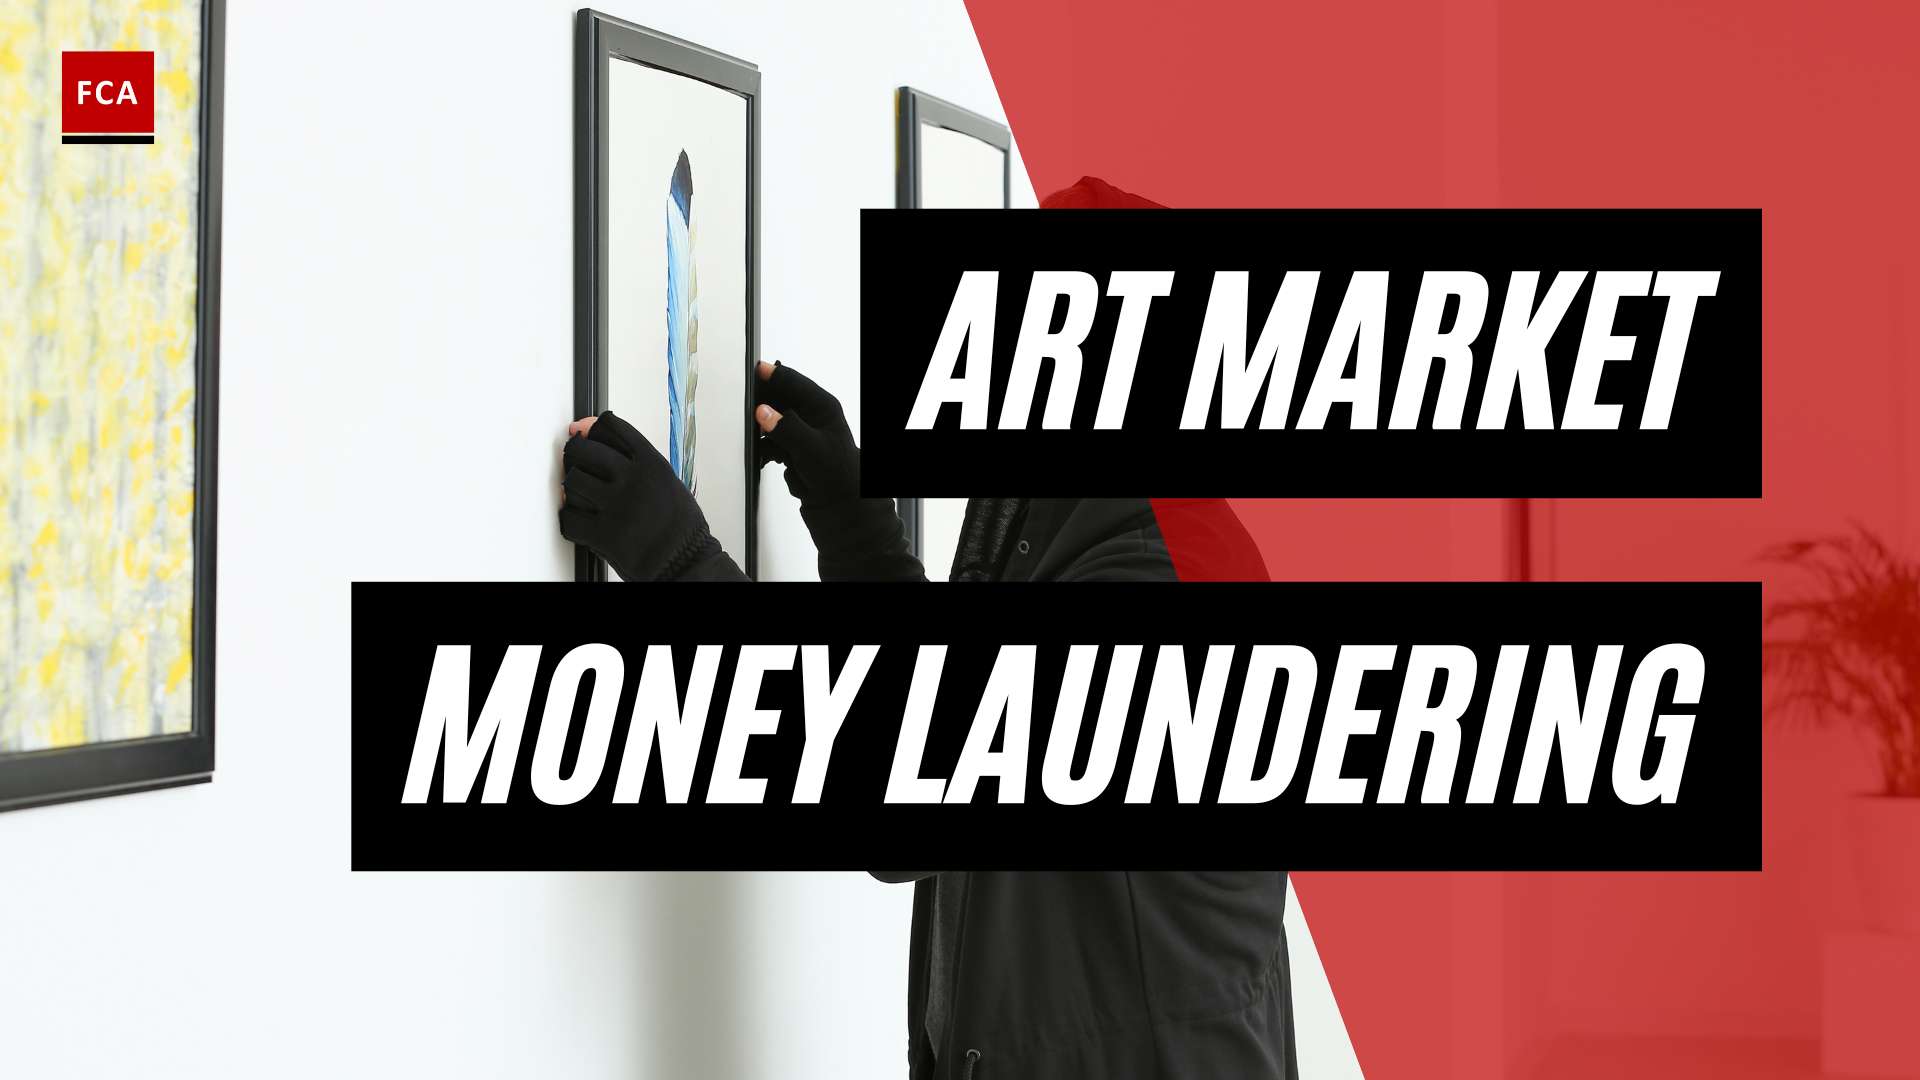 Money Launderings Masterpiece: The Art Markets Role Revealed